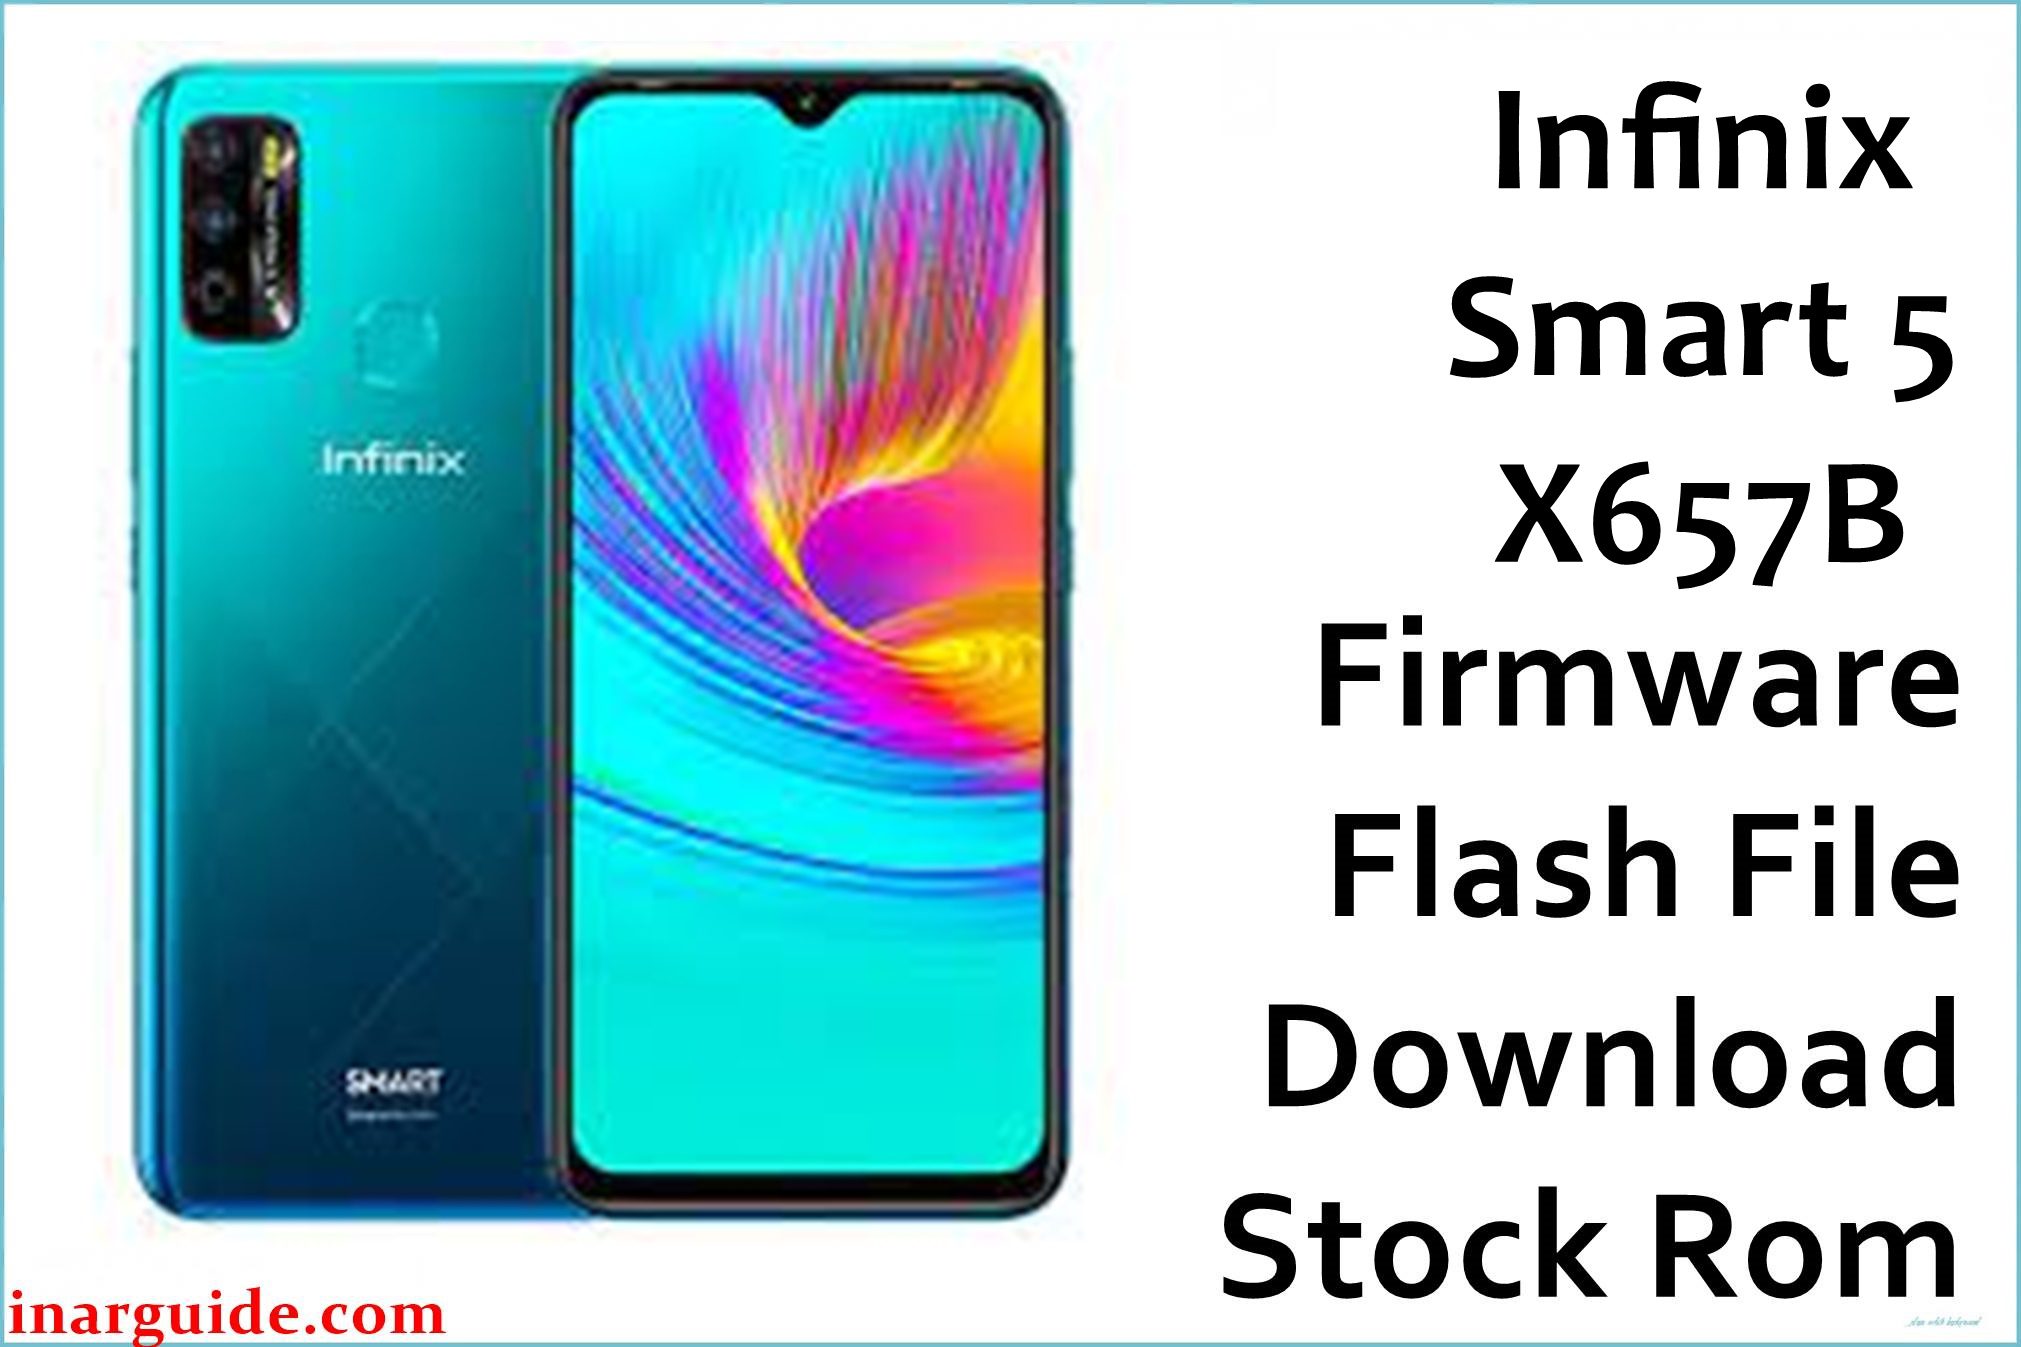 Infinix Smart 5 X657B